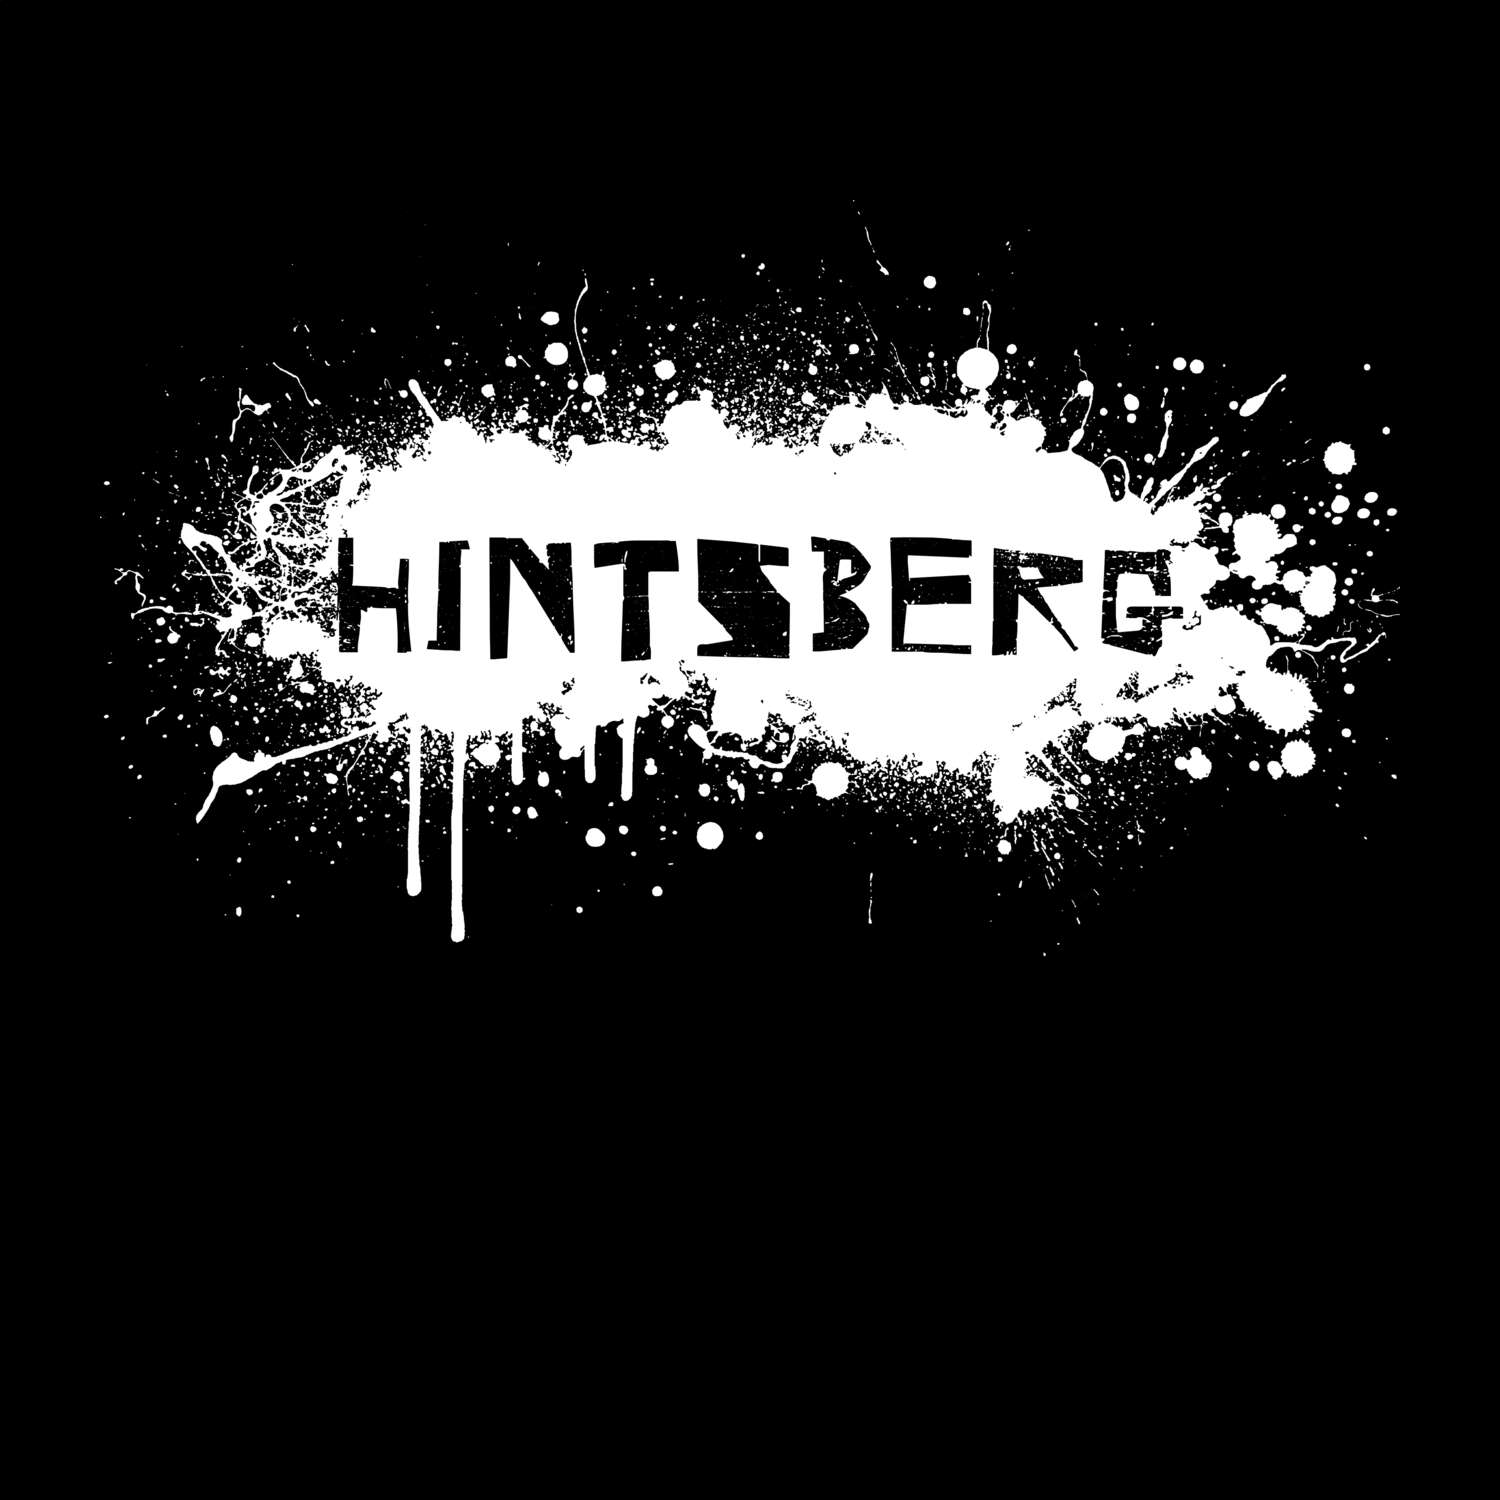 Hintsberg T-Shirt »Paint Splash Punk«